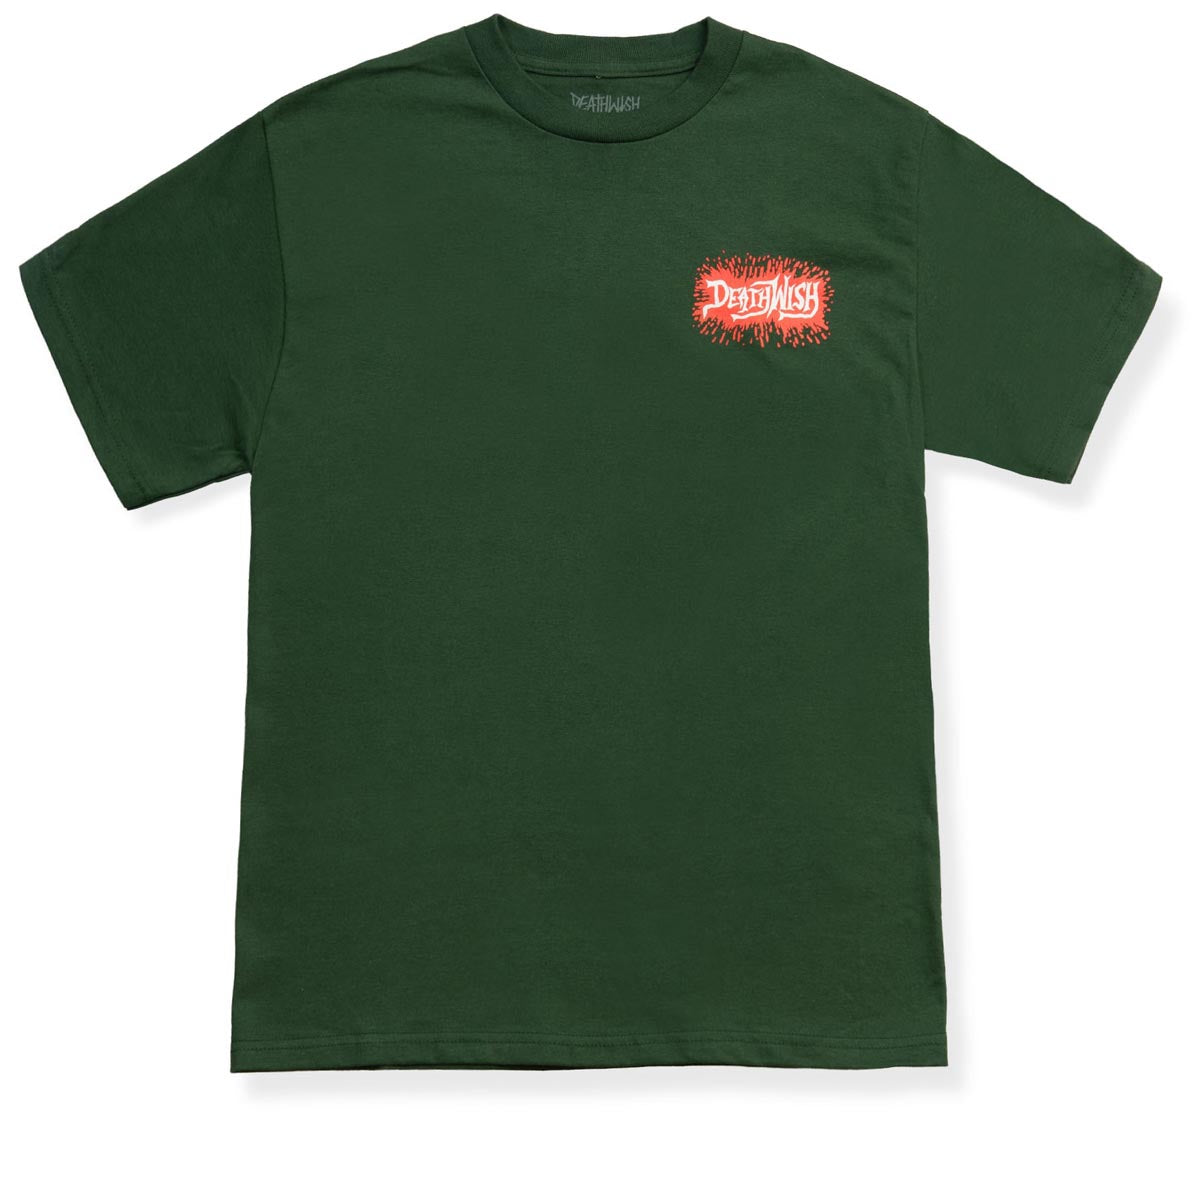 Deathwish Revenge T-Shirt - Green image 2